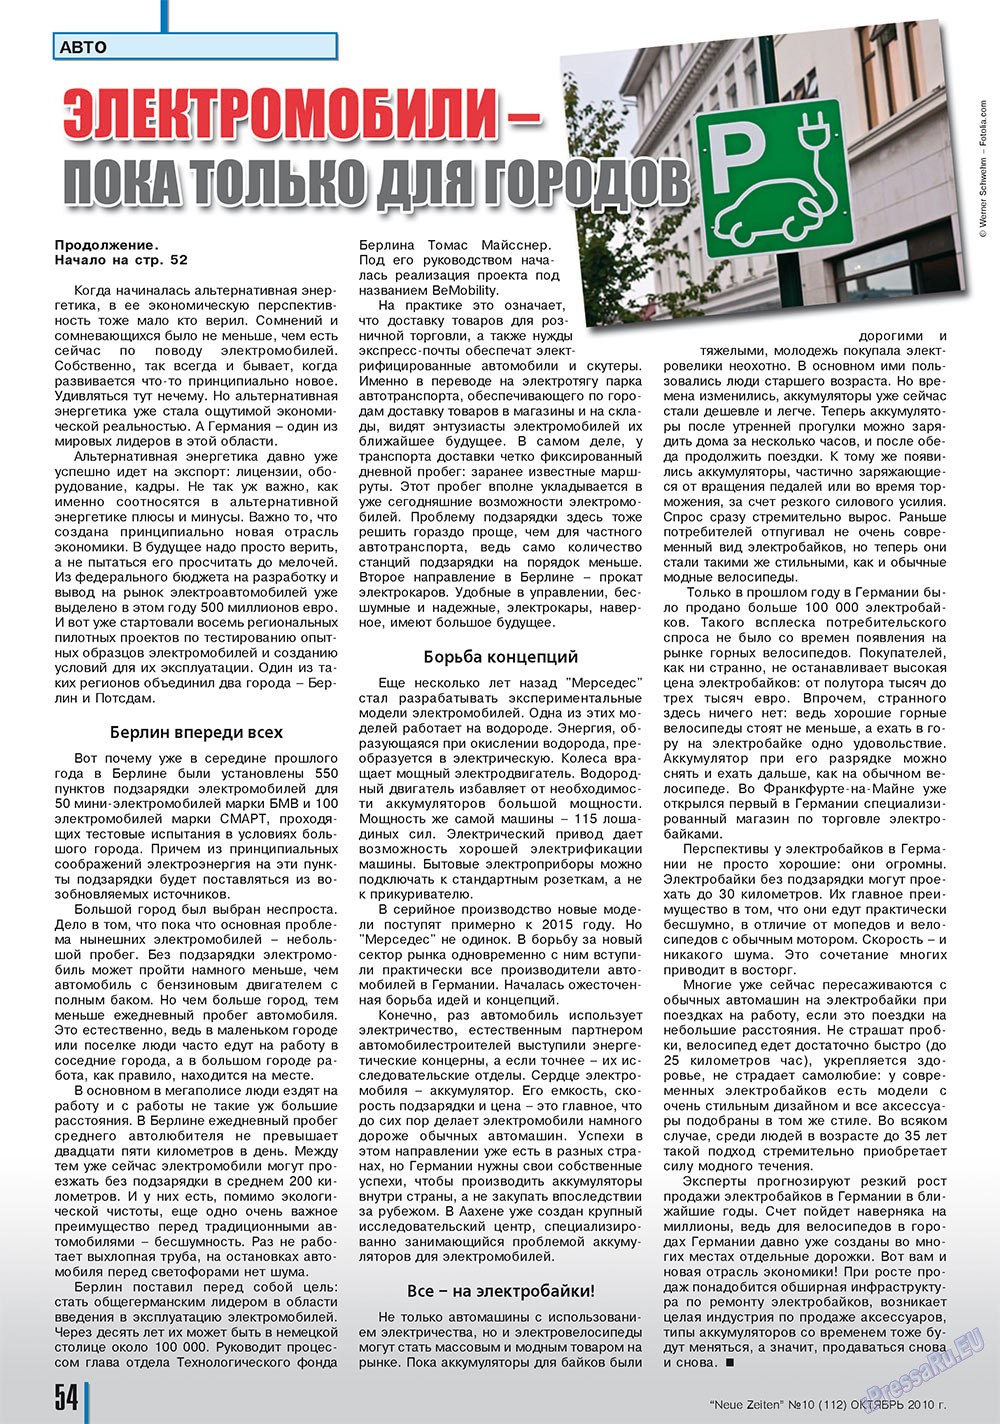 Neue Zeiten (журнал). 2010 год, номер 10, стр. 54